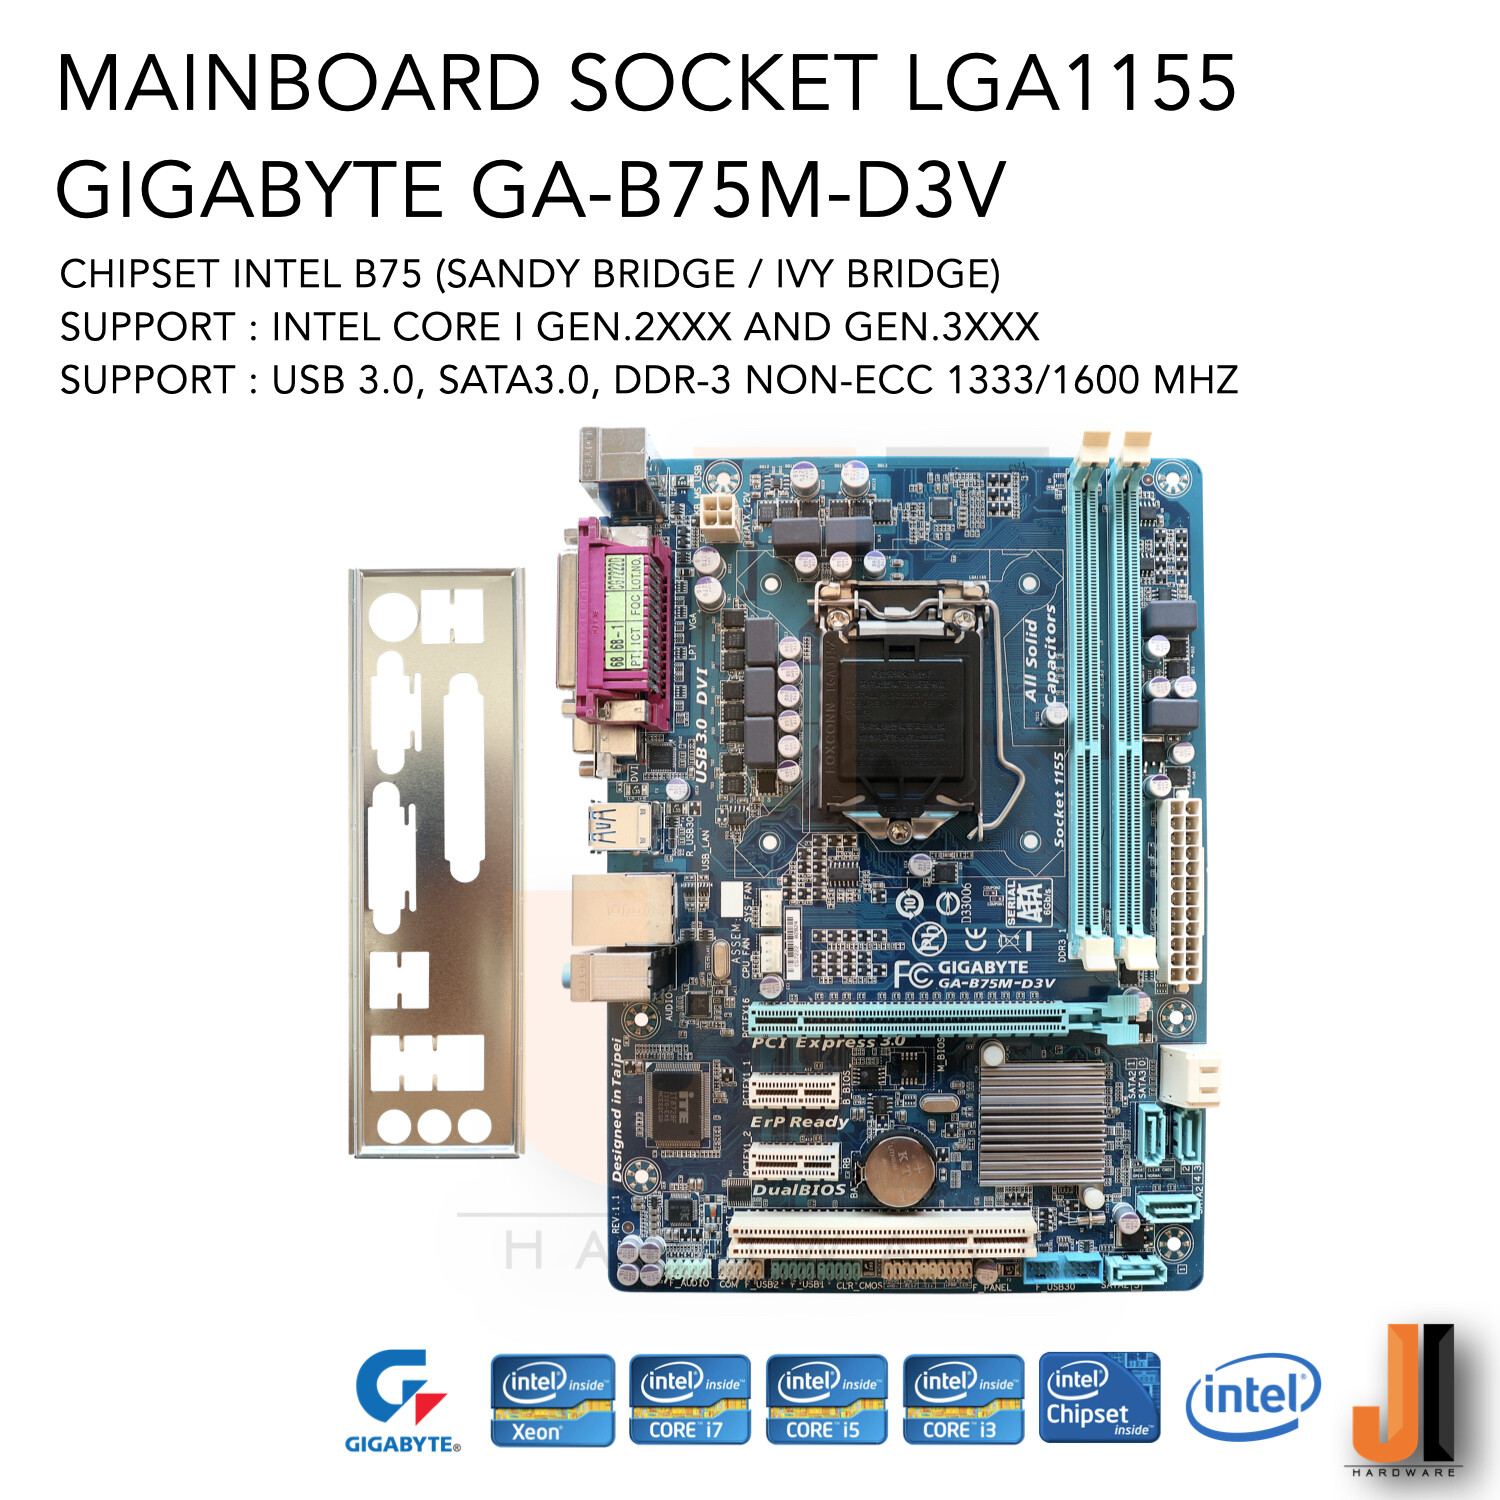 Mainboard Gigabyte GA-B75M-D3V (LGA1155) Support Intel Core i Gen.2XXX and Gen.3XXX Series (สินค้ามือสองสภาพดีมีฝาหลังมีการรับประกัน)